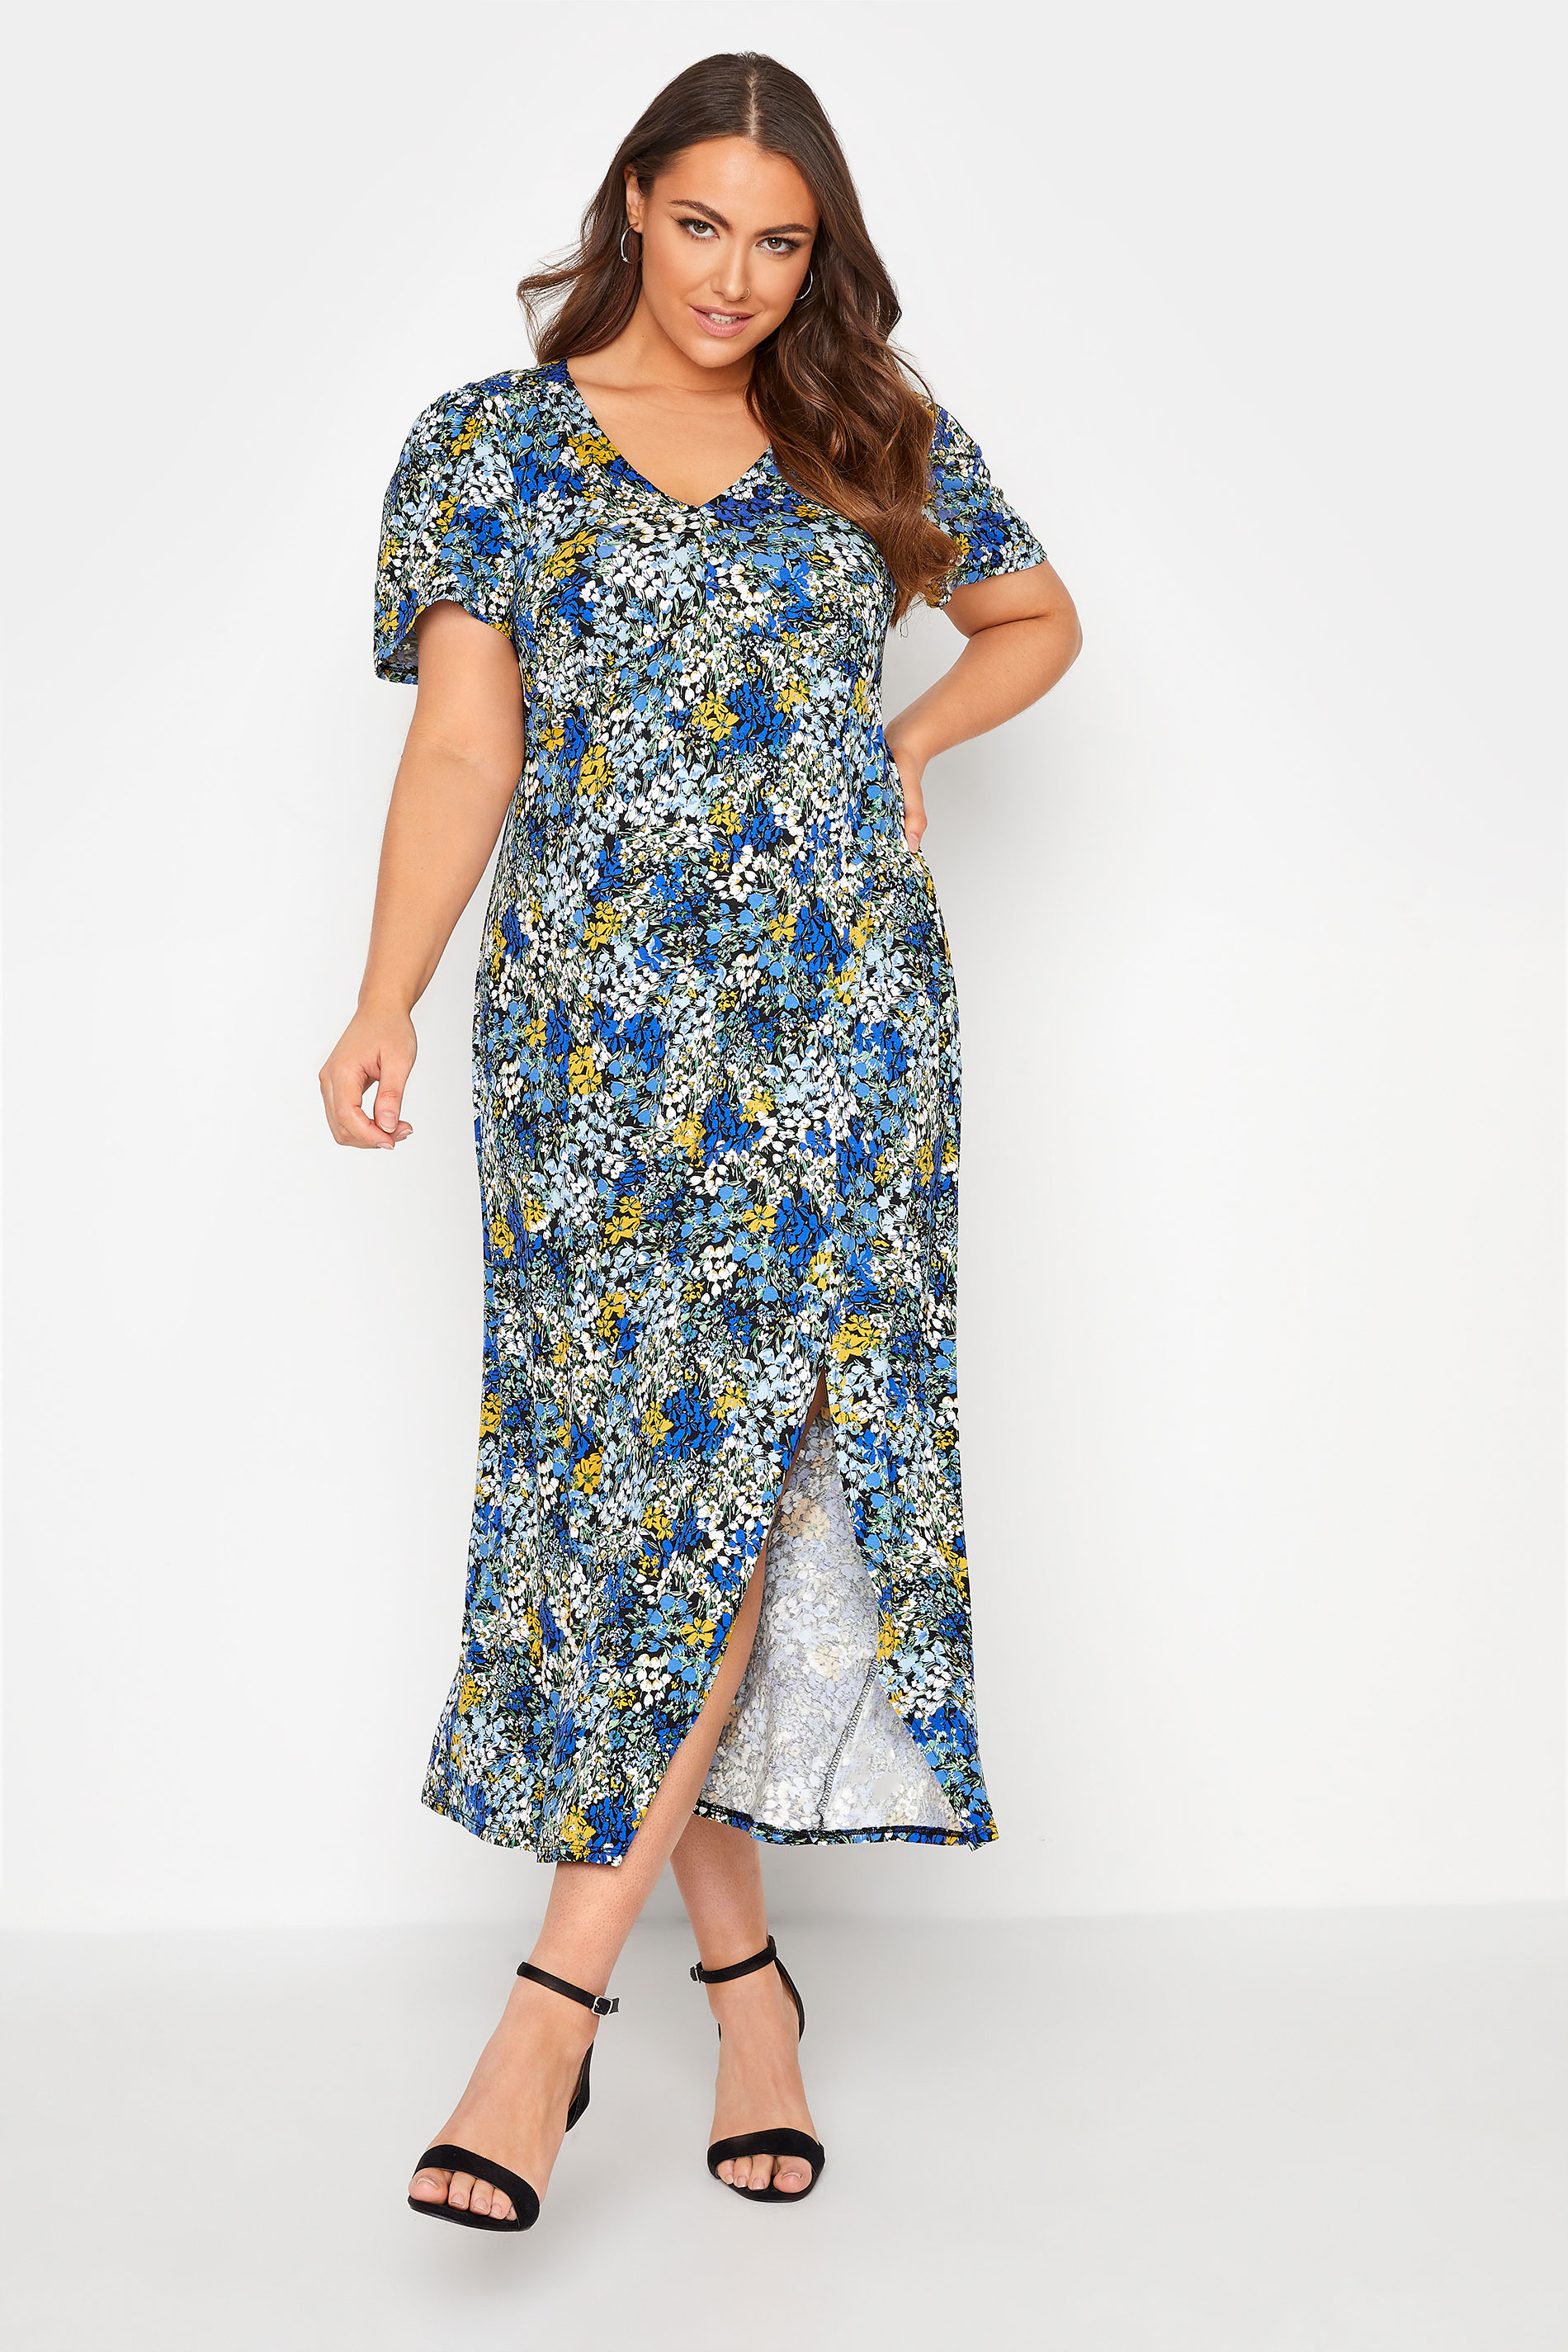 YOURS LONDON Blue Floral V-Neck Tea Dress | Yours Clothing 1